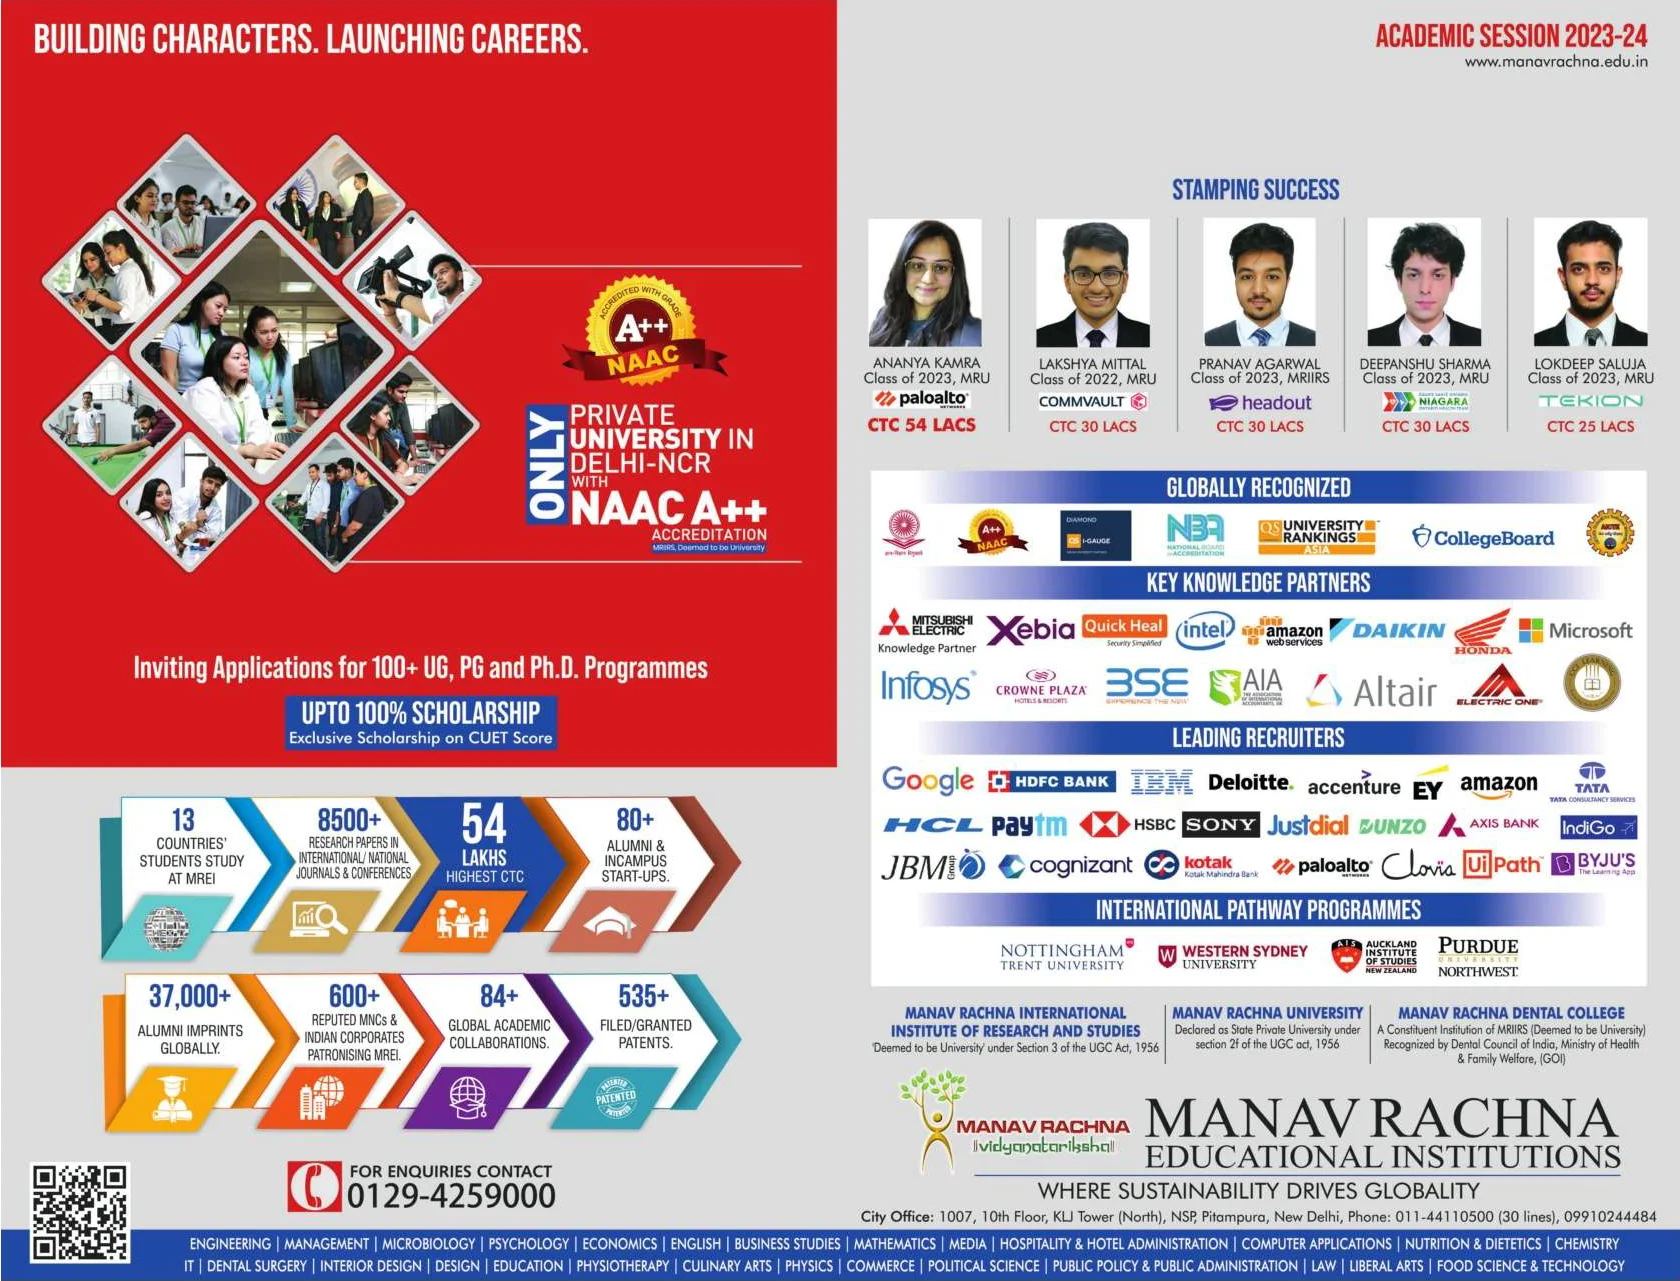 Manav Ranchna Educational Institute's advertisement